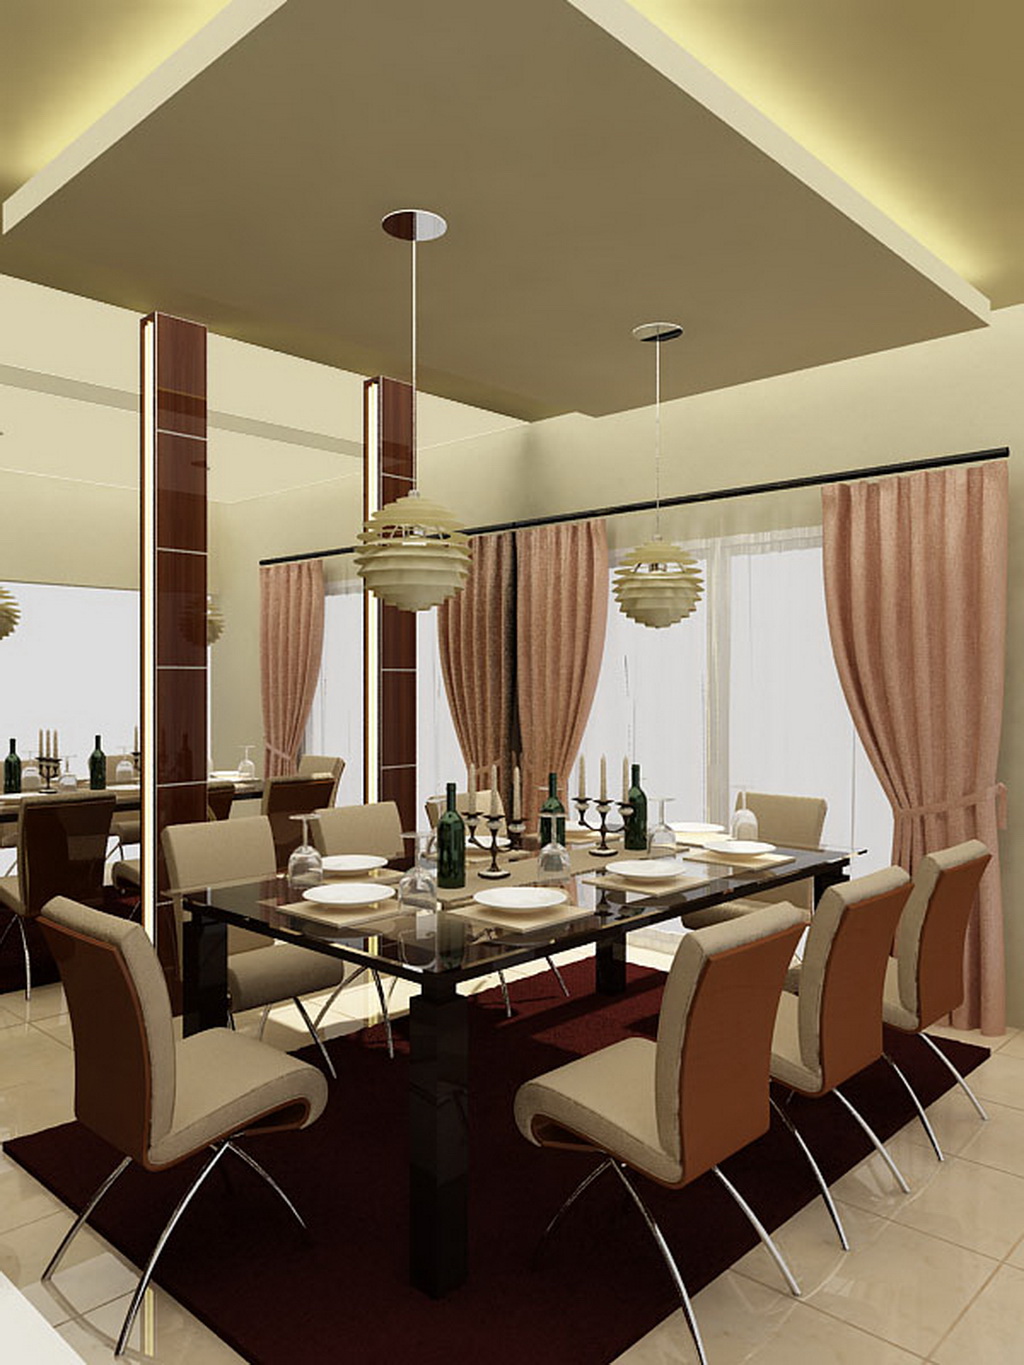 25 Modern Dining Room Design Ideas - Decoration Love